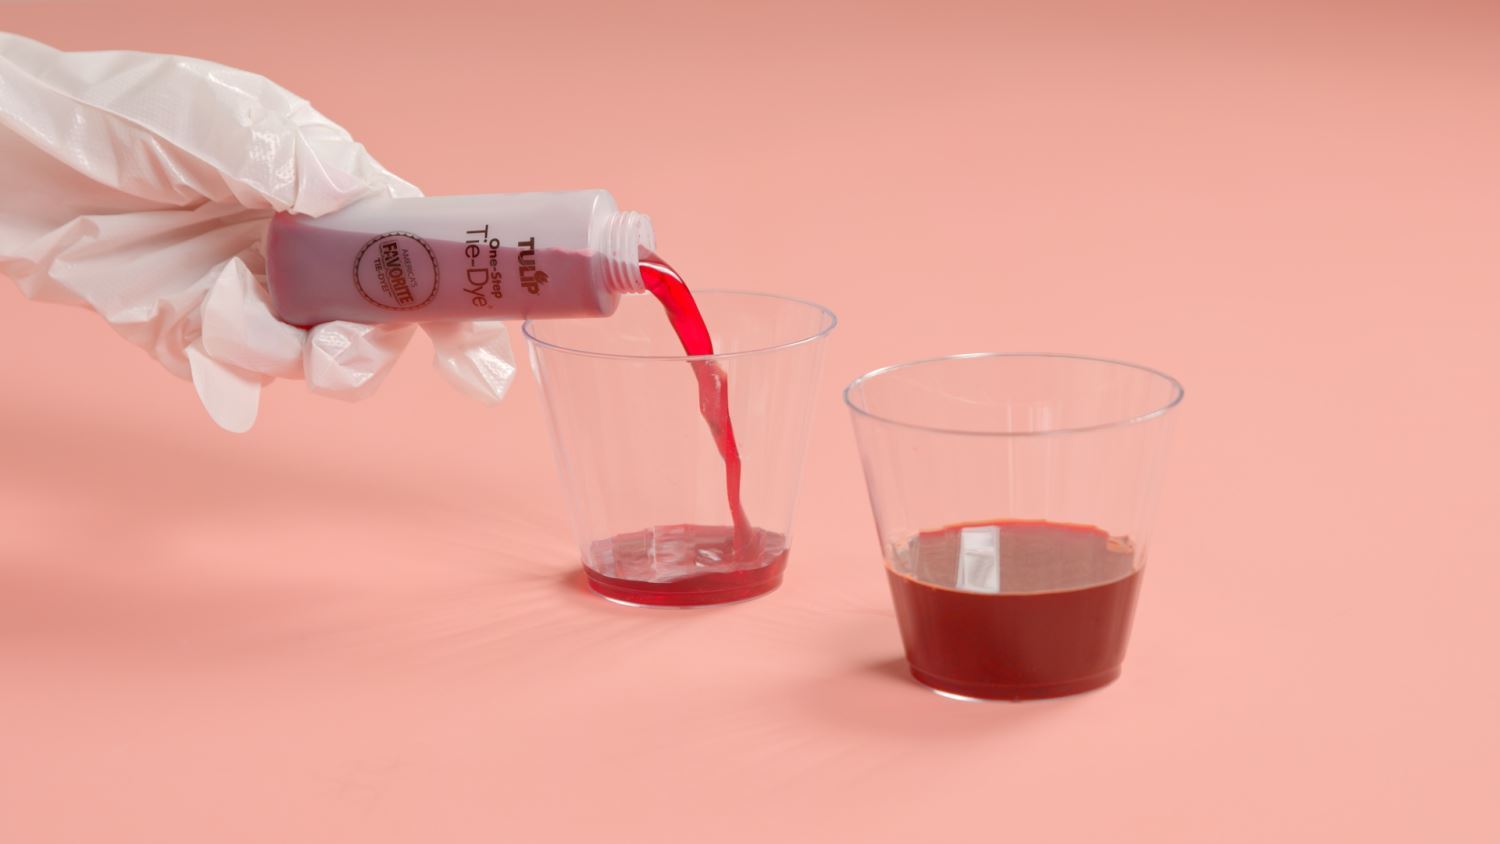 Pour dye into cups